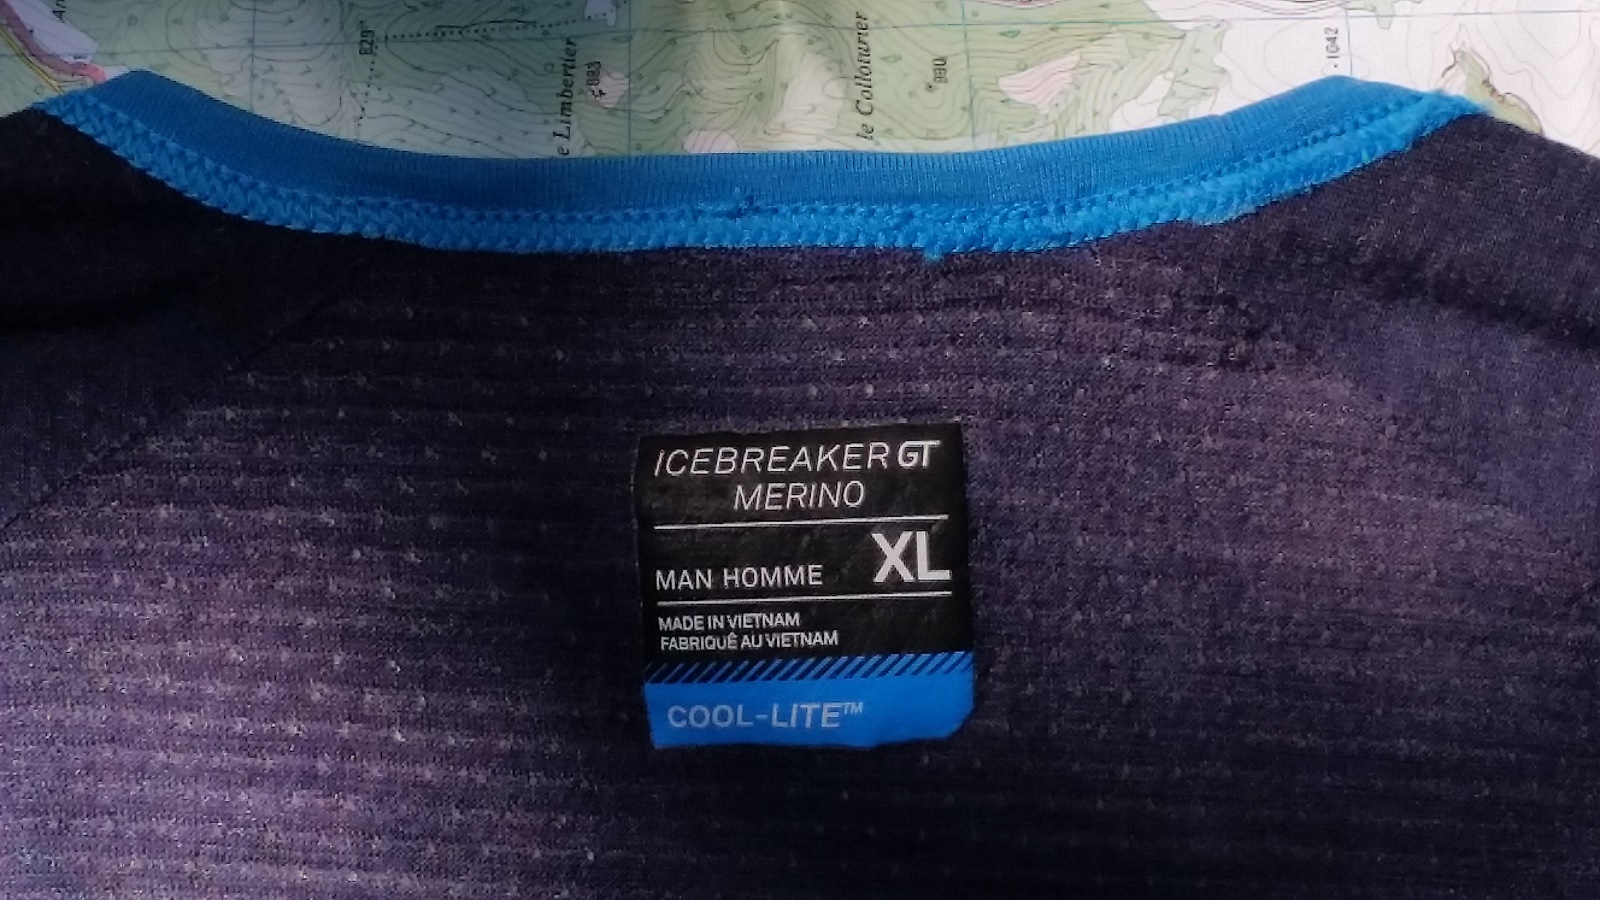 Test brassière Icebreaker Cool-Lite Meld Zone, en laine et confortable